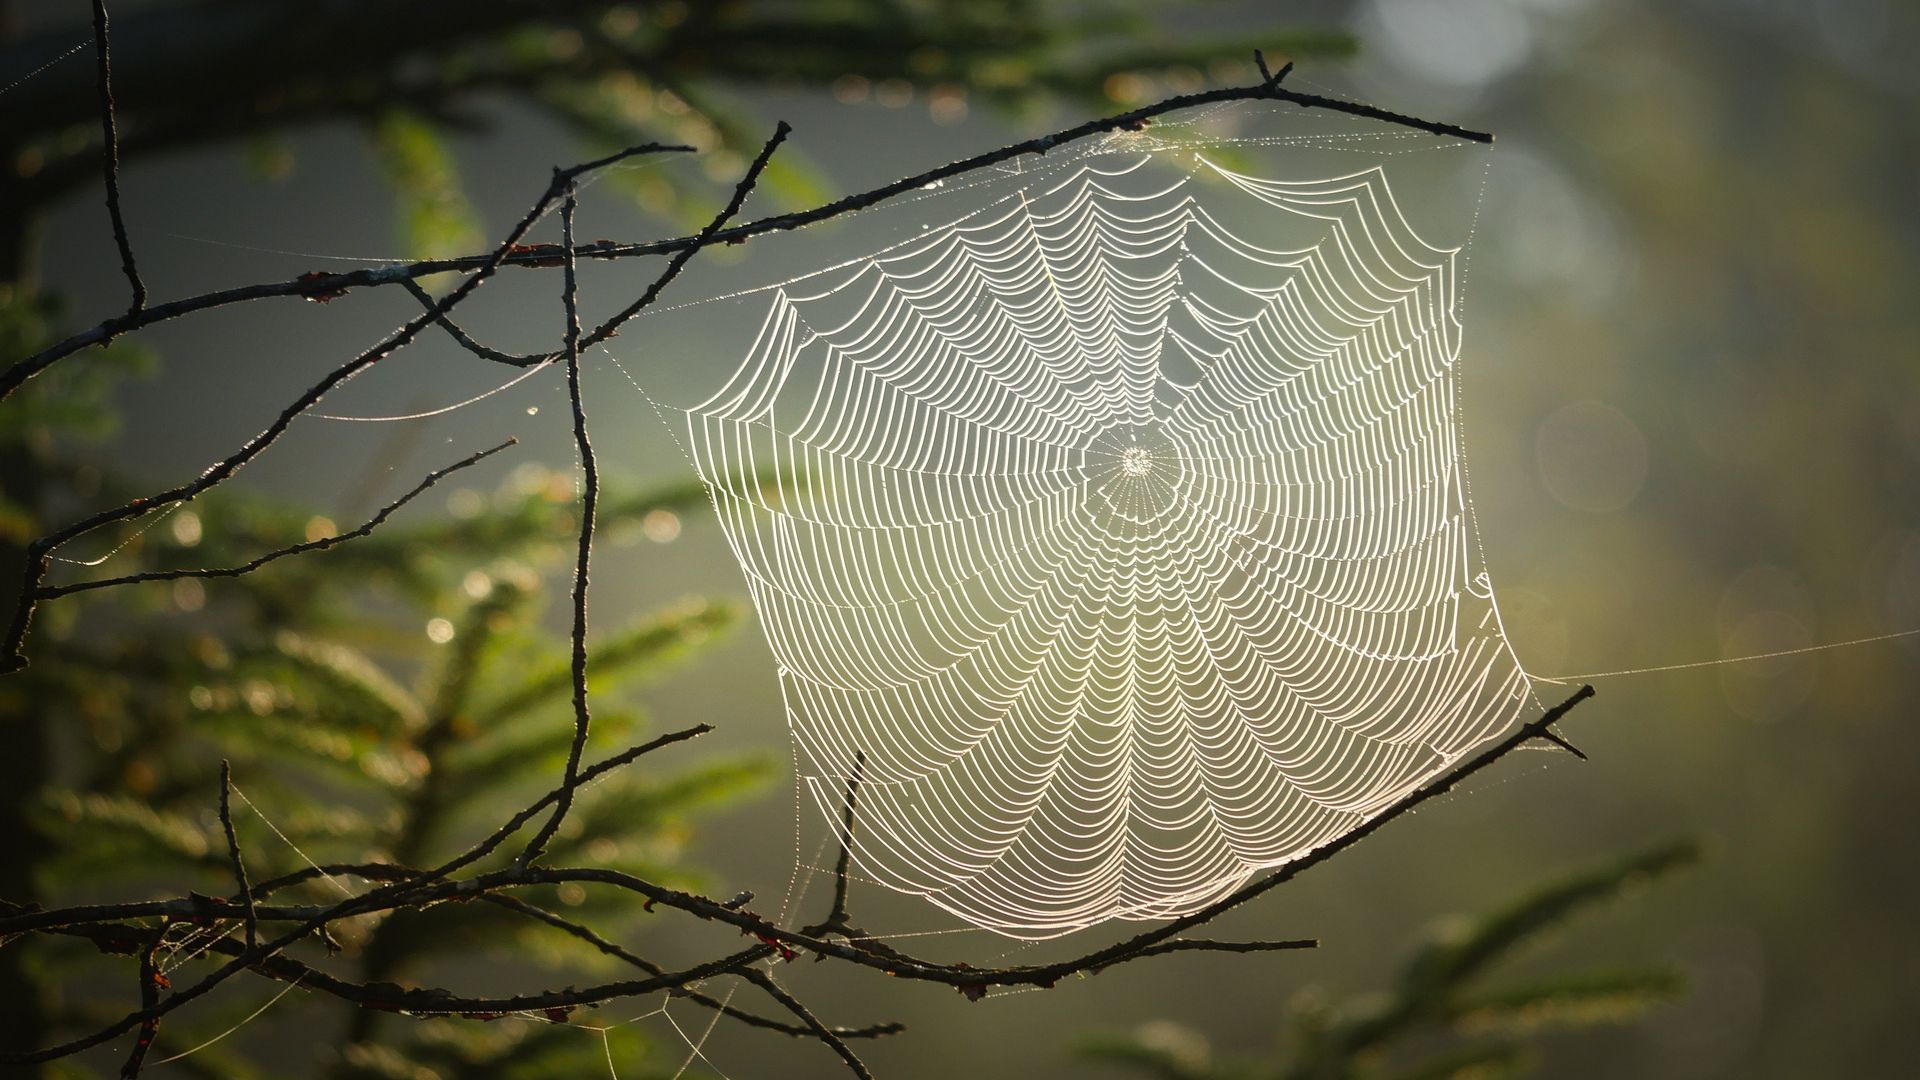 Weaving a web of wonder, spider web 